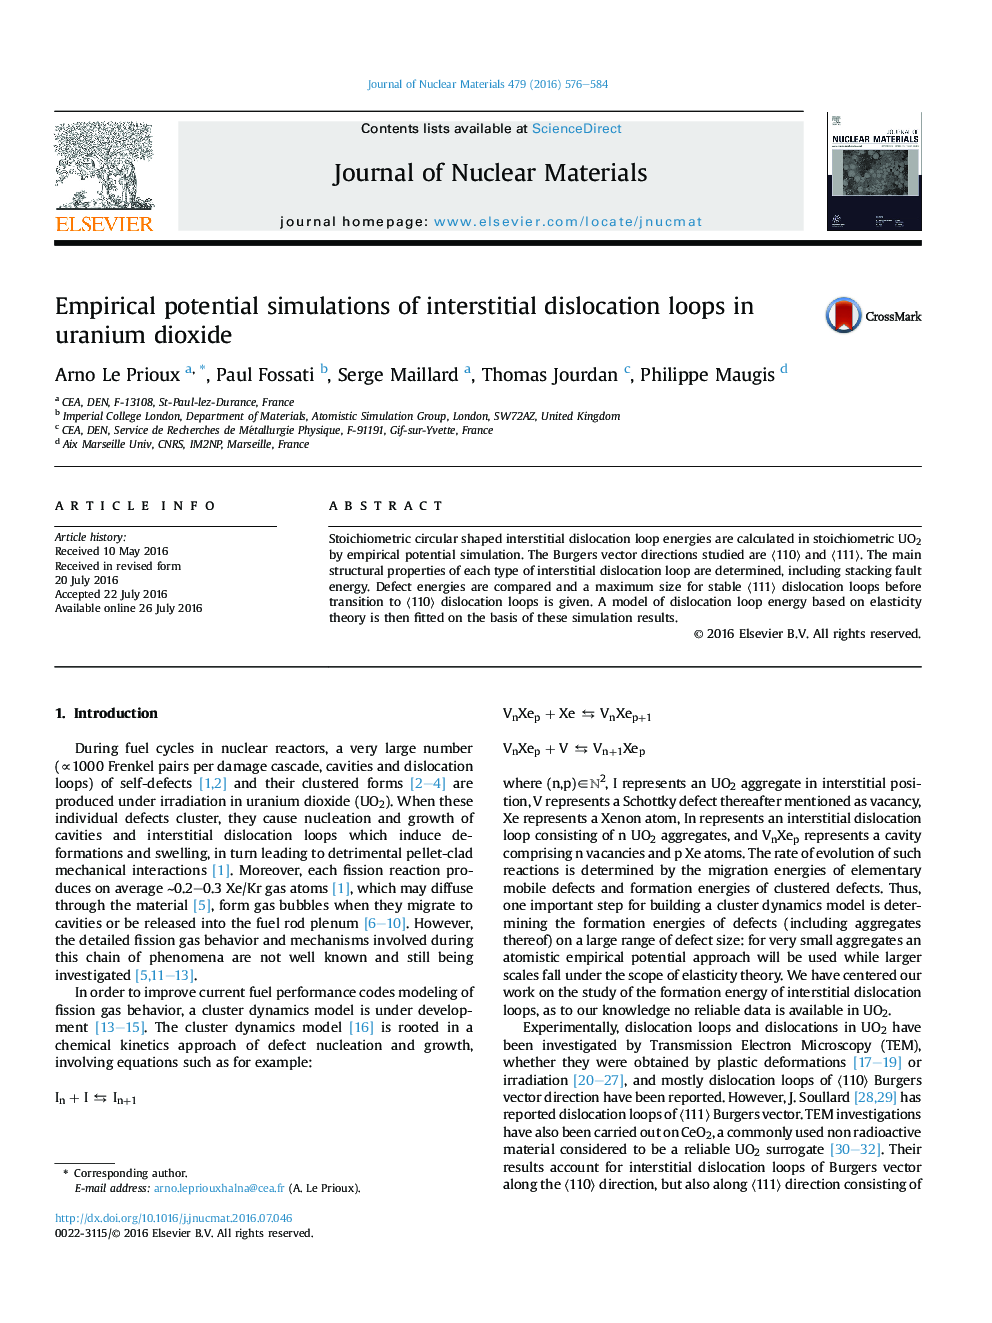 Empirical potential simulations of interstitial dislocation loops in uranium dioxide